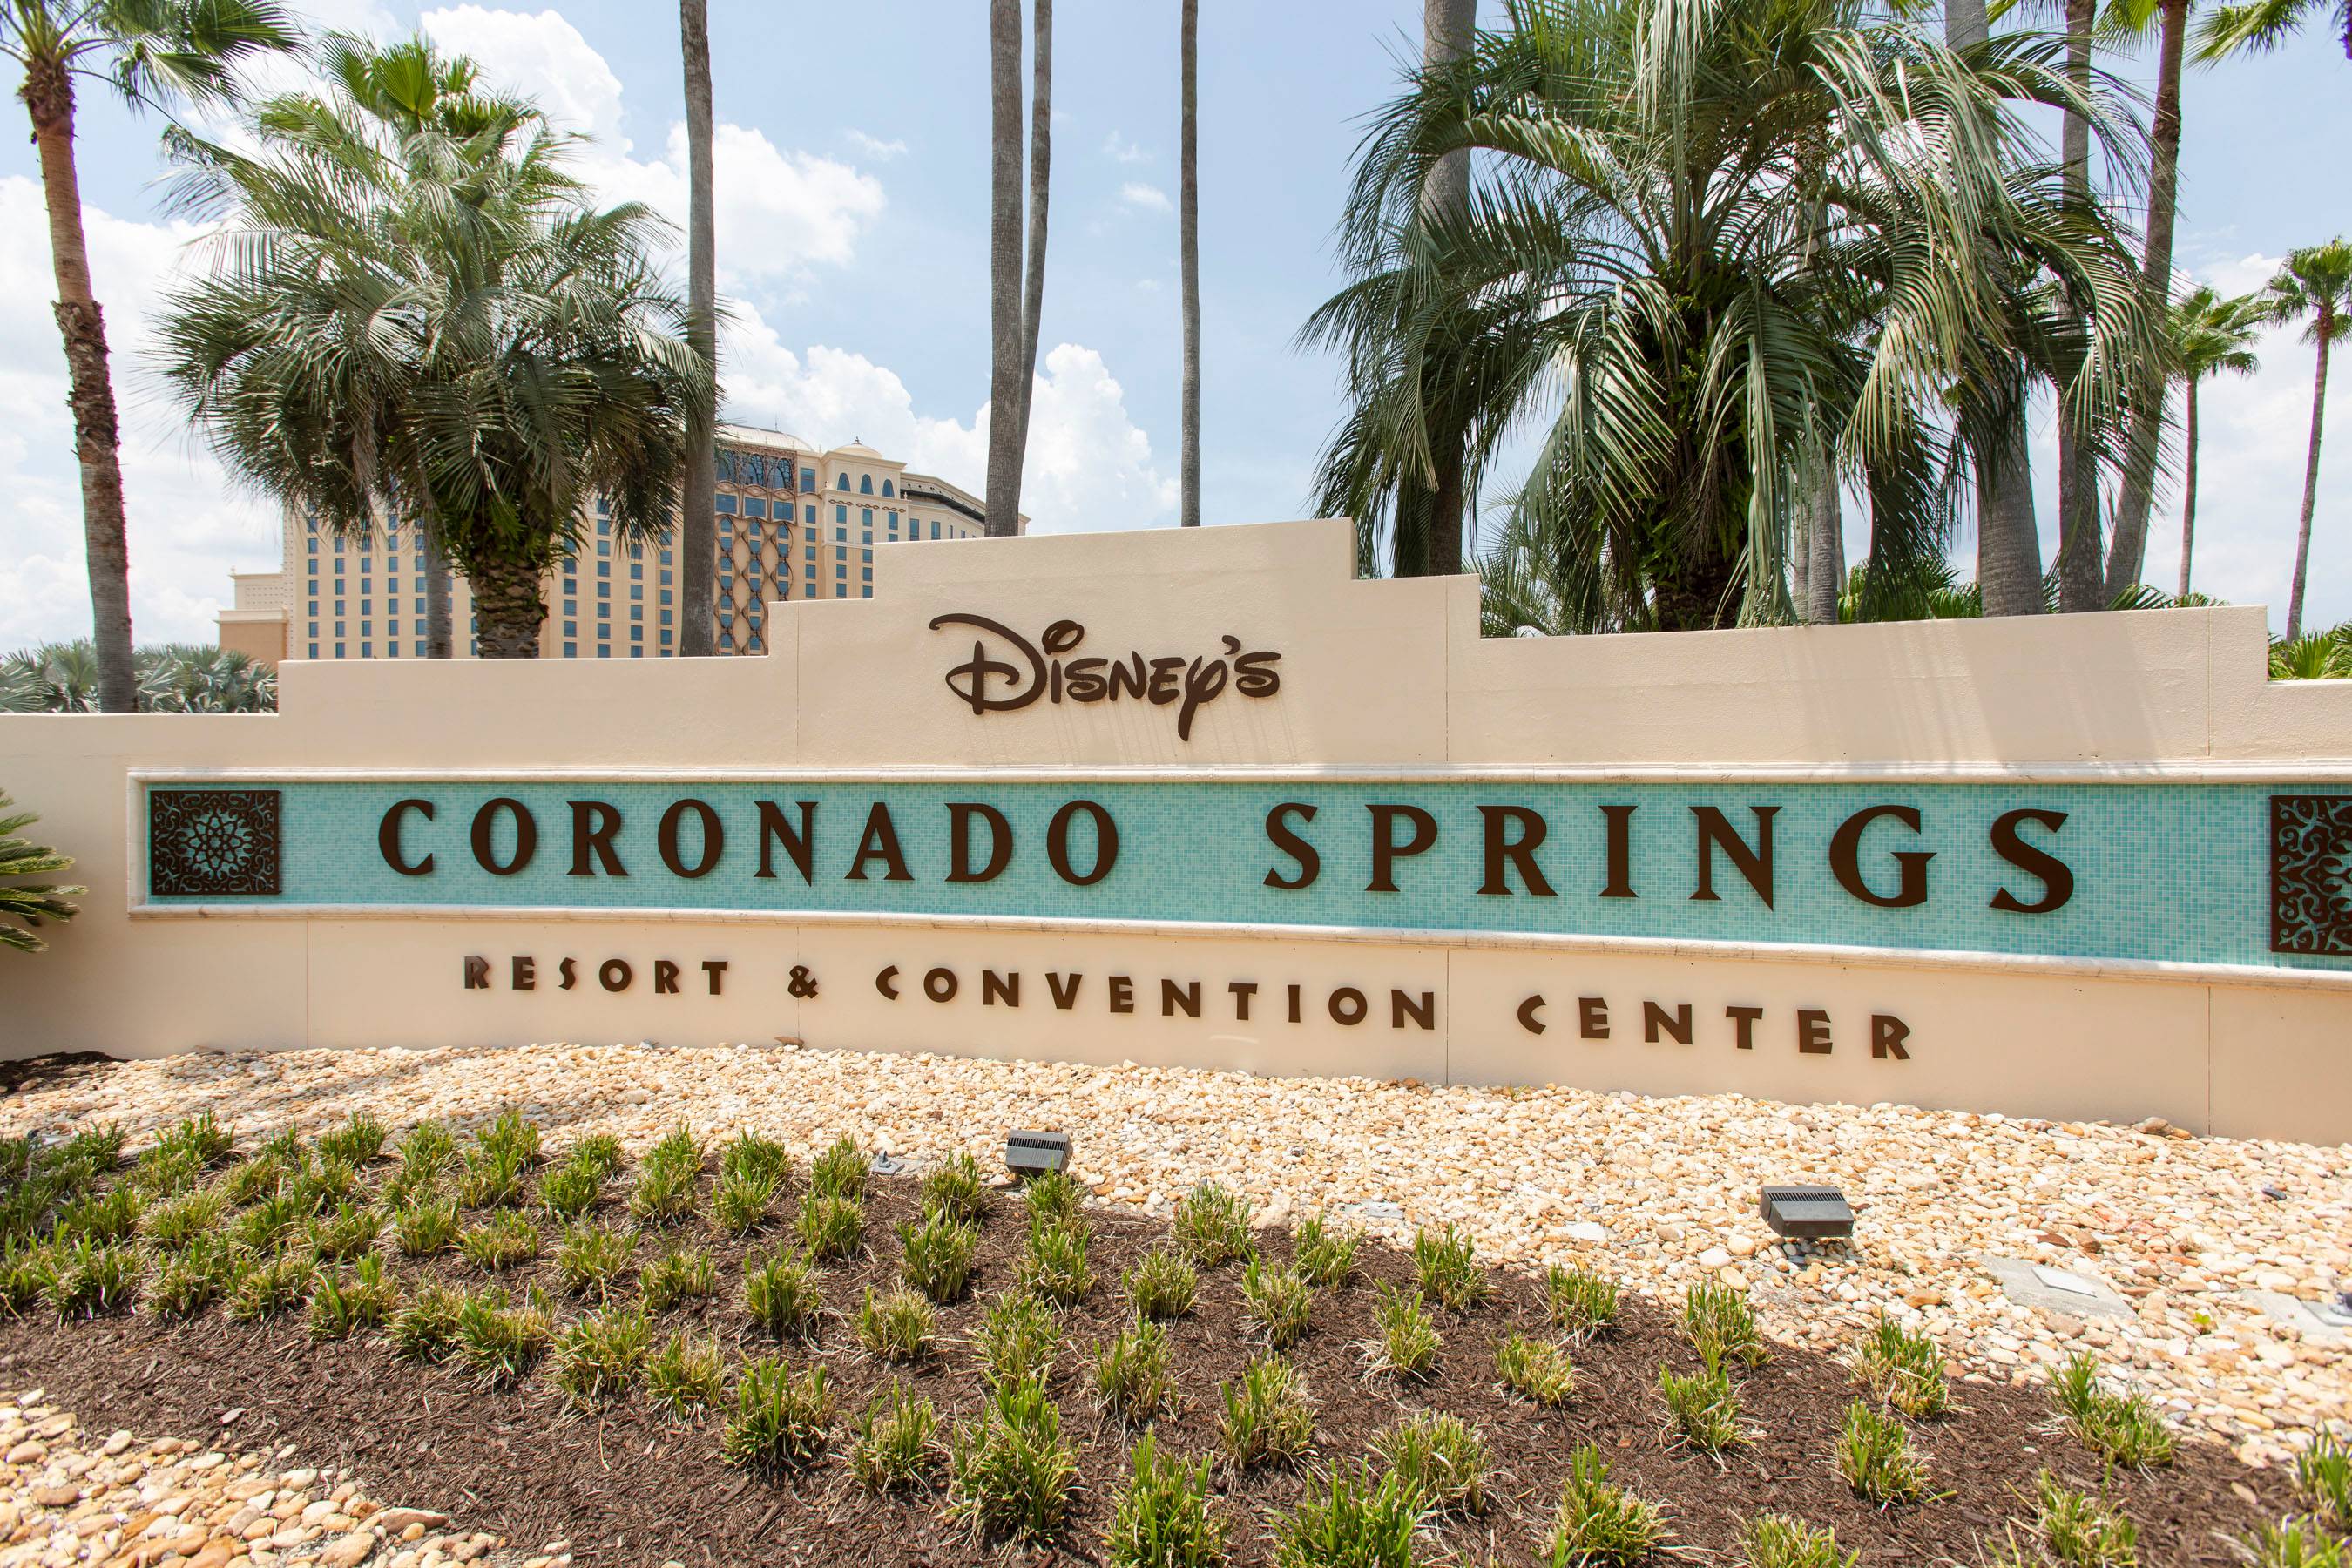 New entrance sign at Disney's Coronado Springs Resort